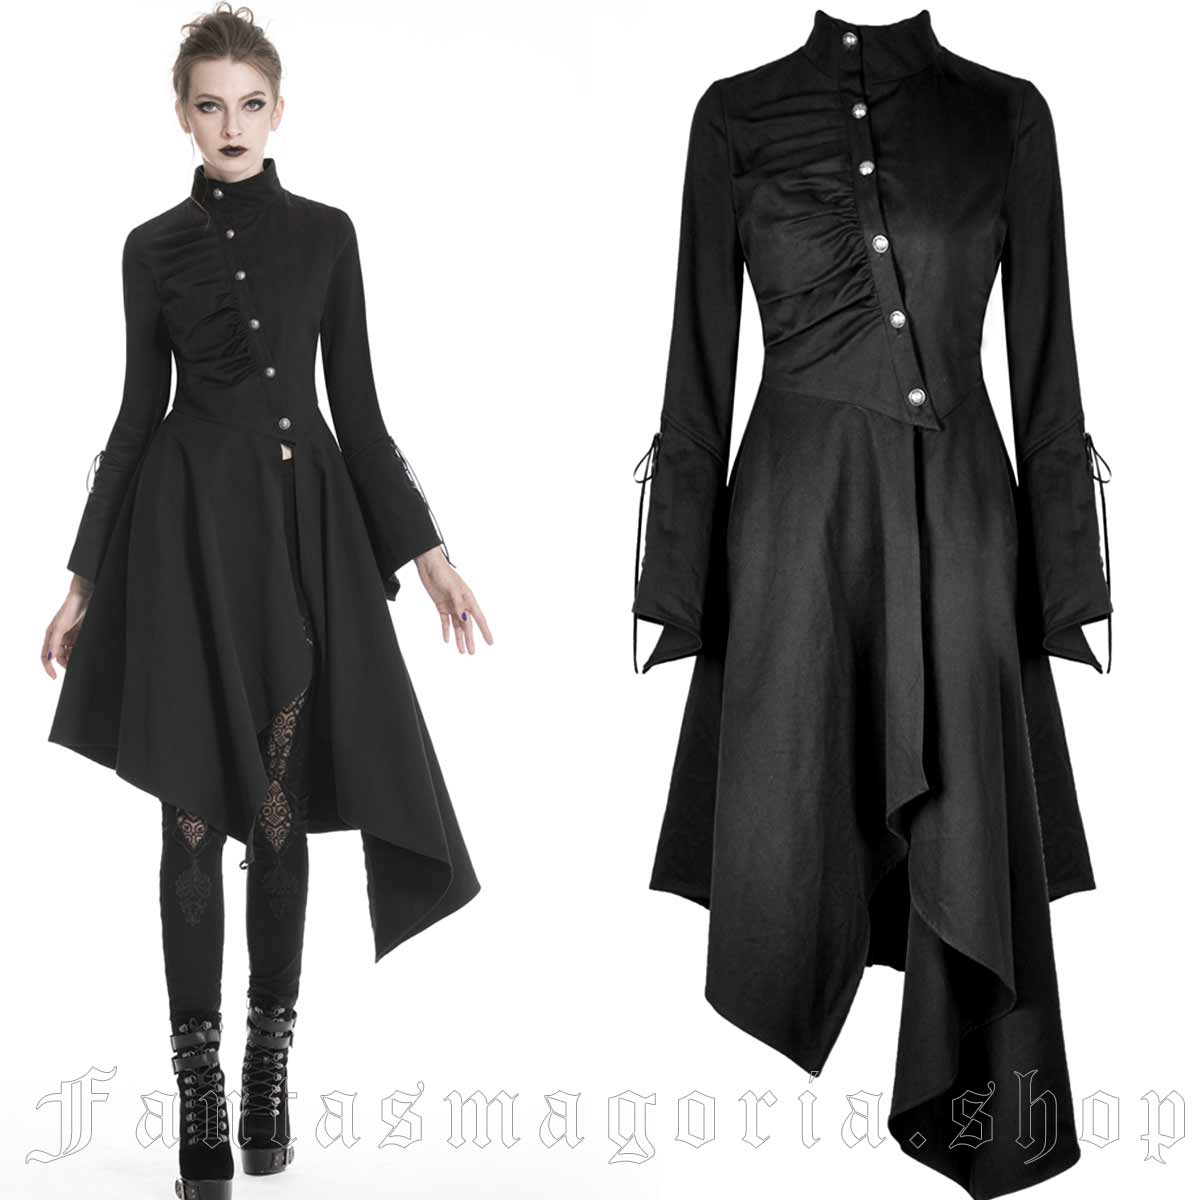 Women's Gothic asymmetric button-up long flared sleeve high neck hanky hem tunic dress top jacket. - Dark in Love - JW208